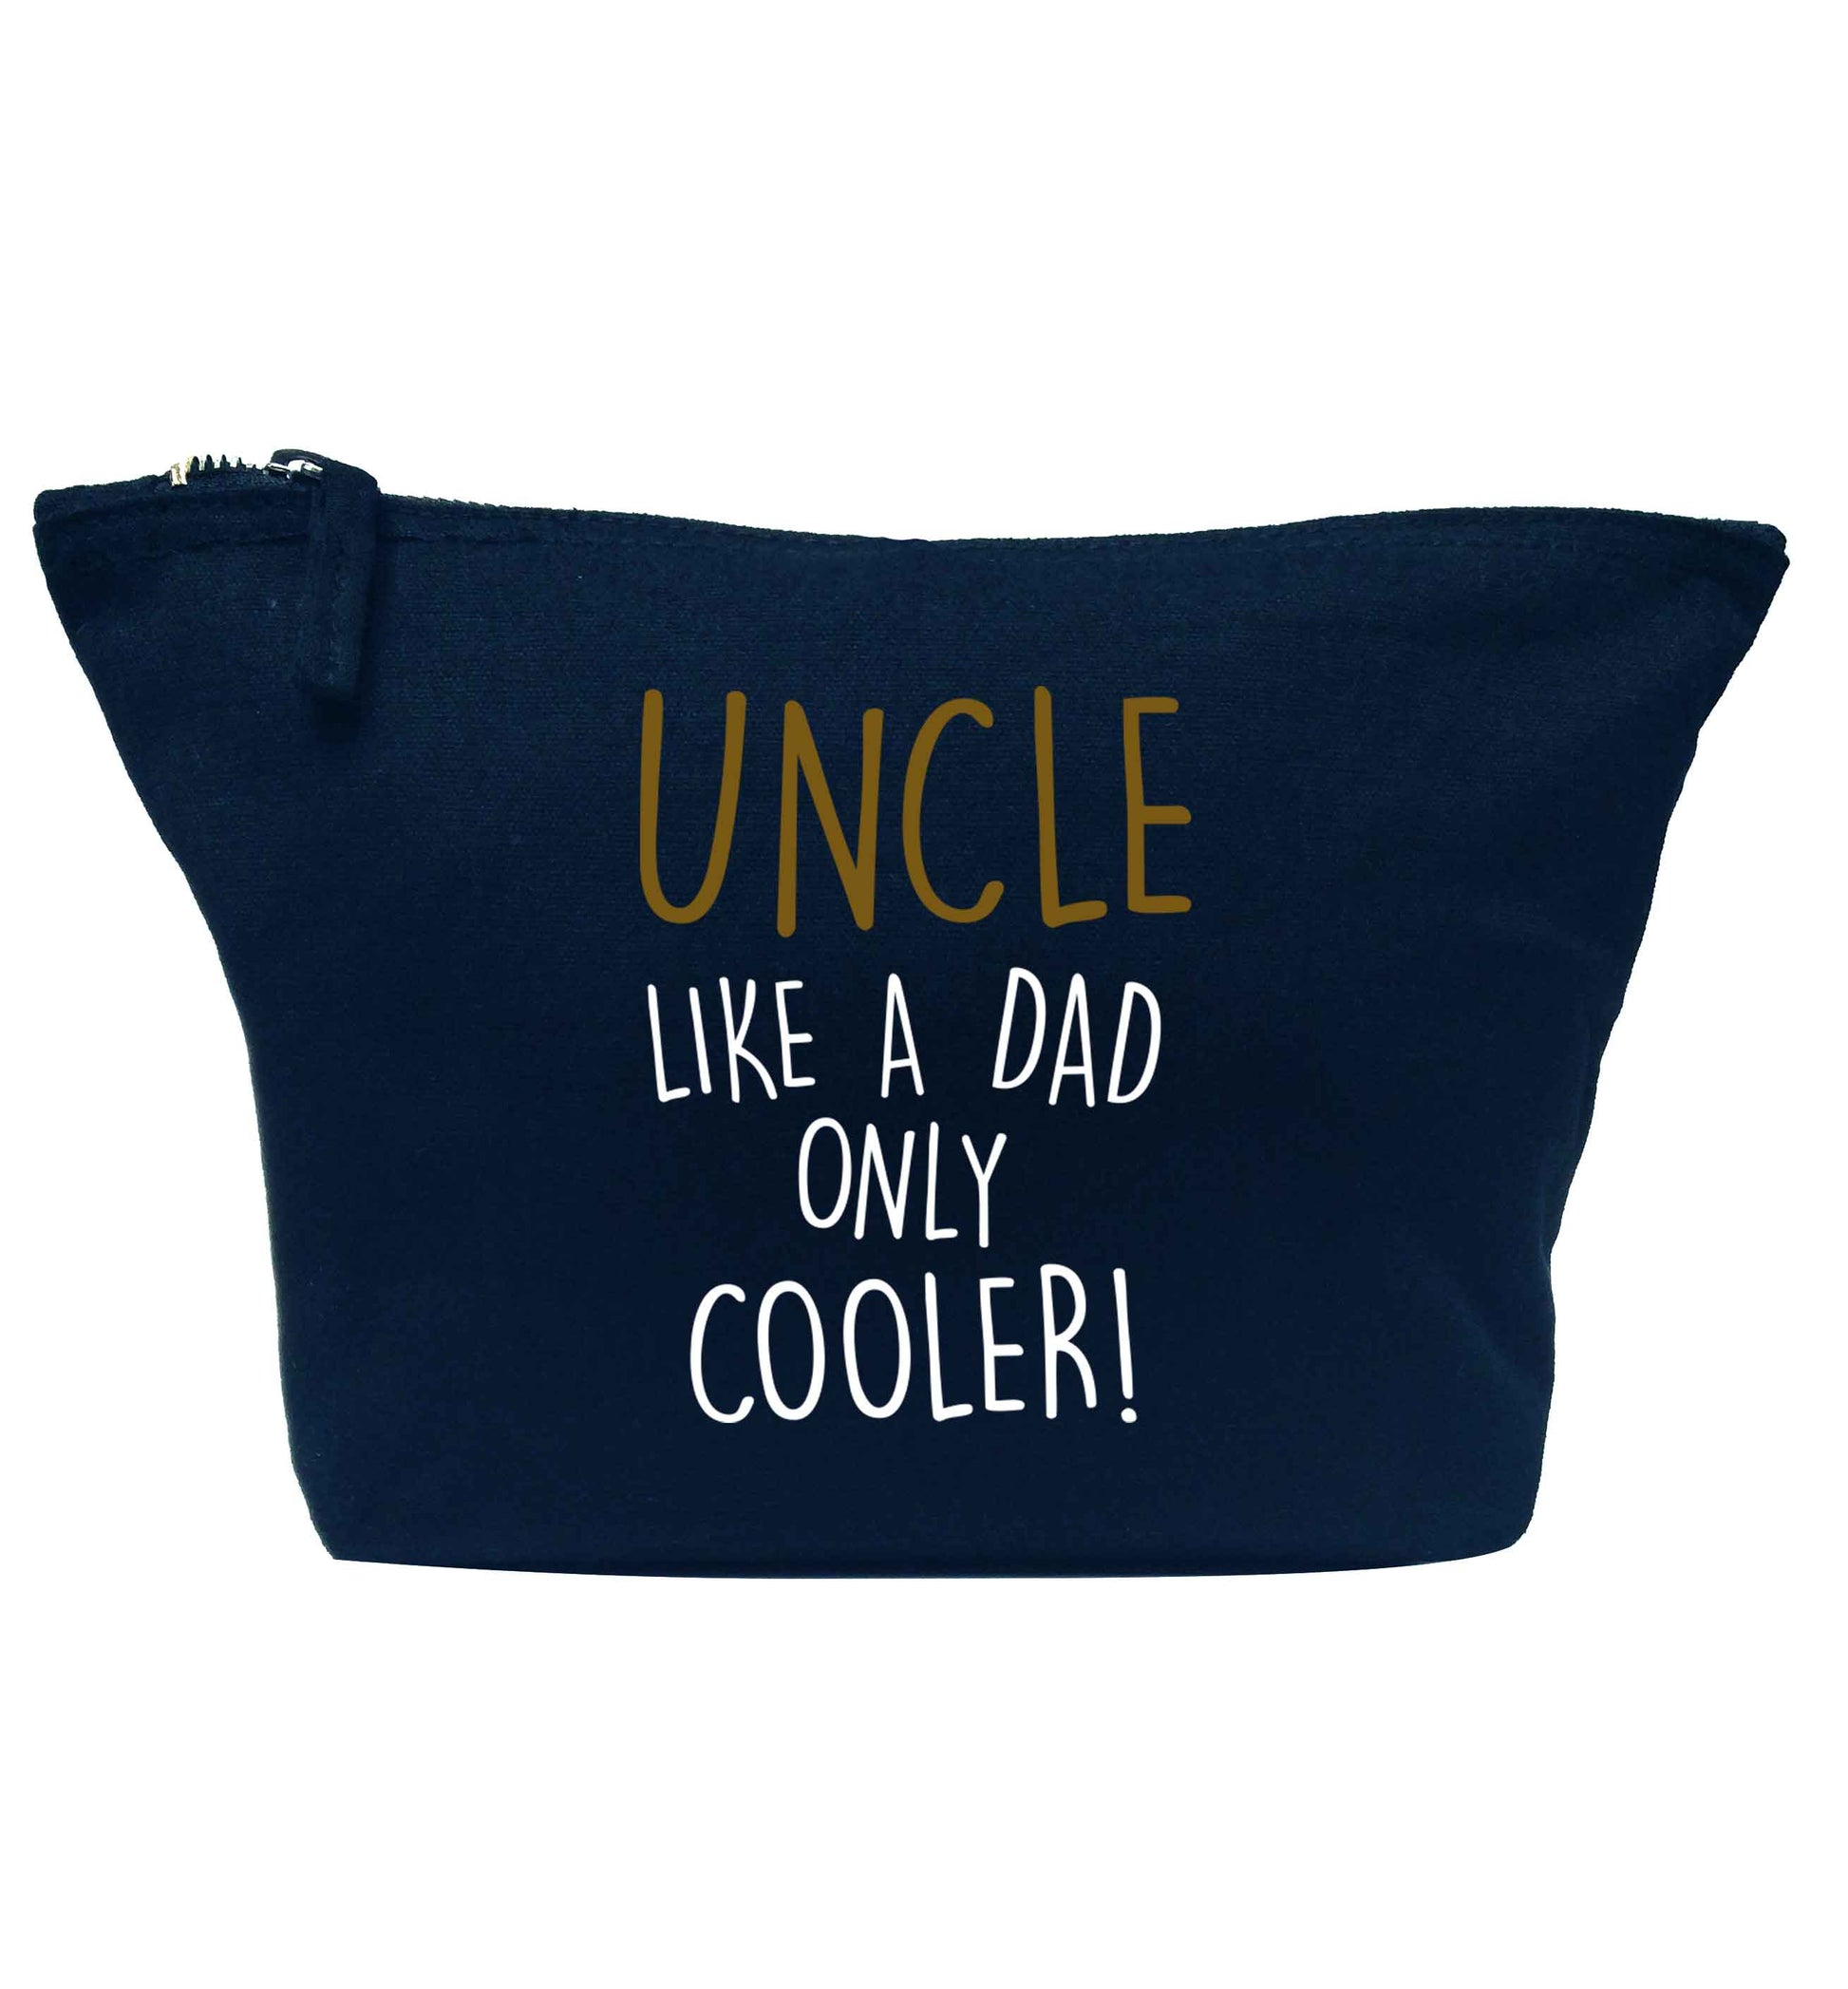 Uncle like a dad only cooler navy makeup bag